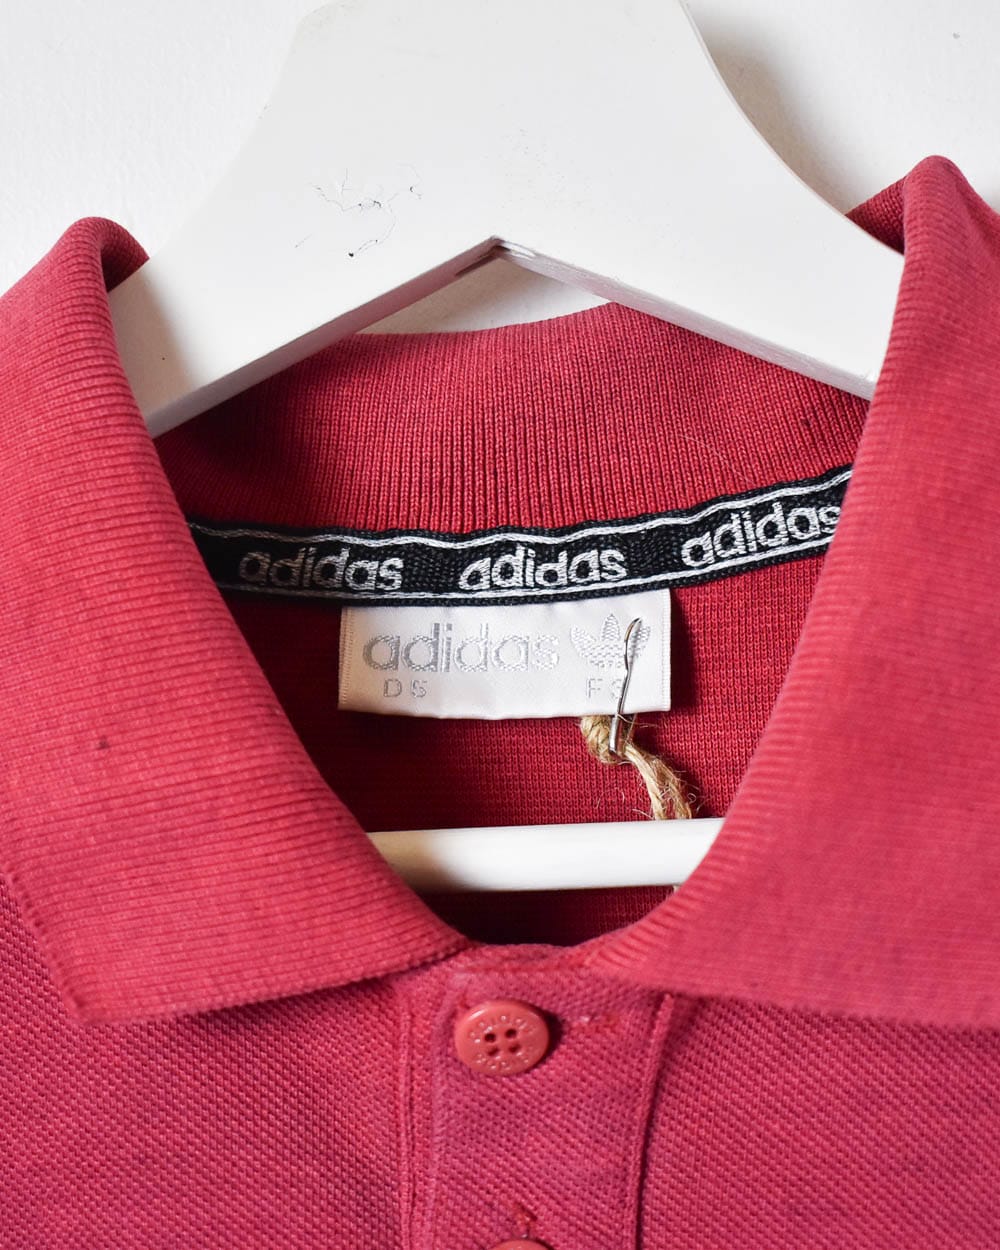 Red Adidas Polo Shirt - Medium